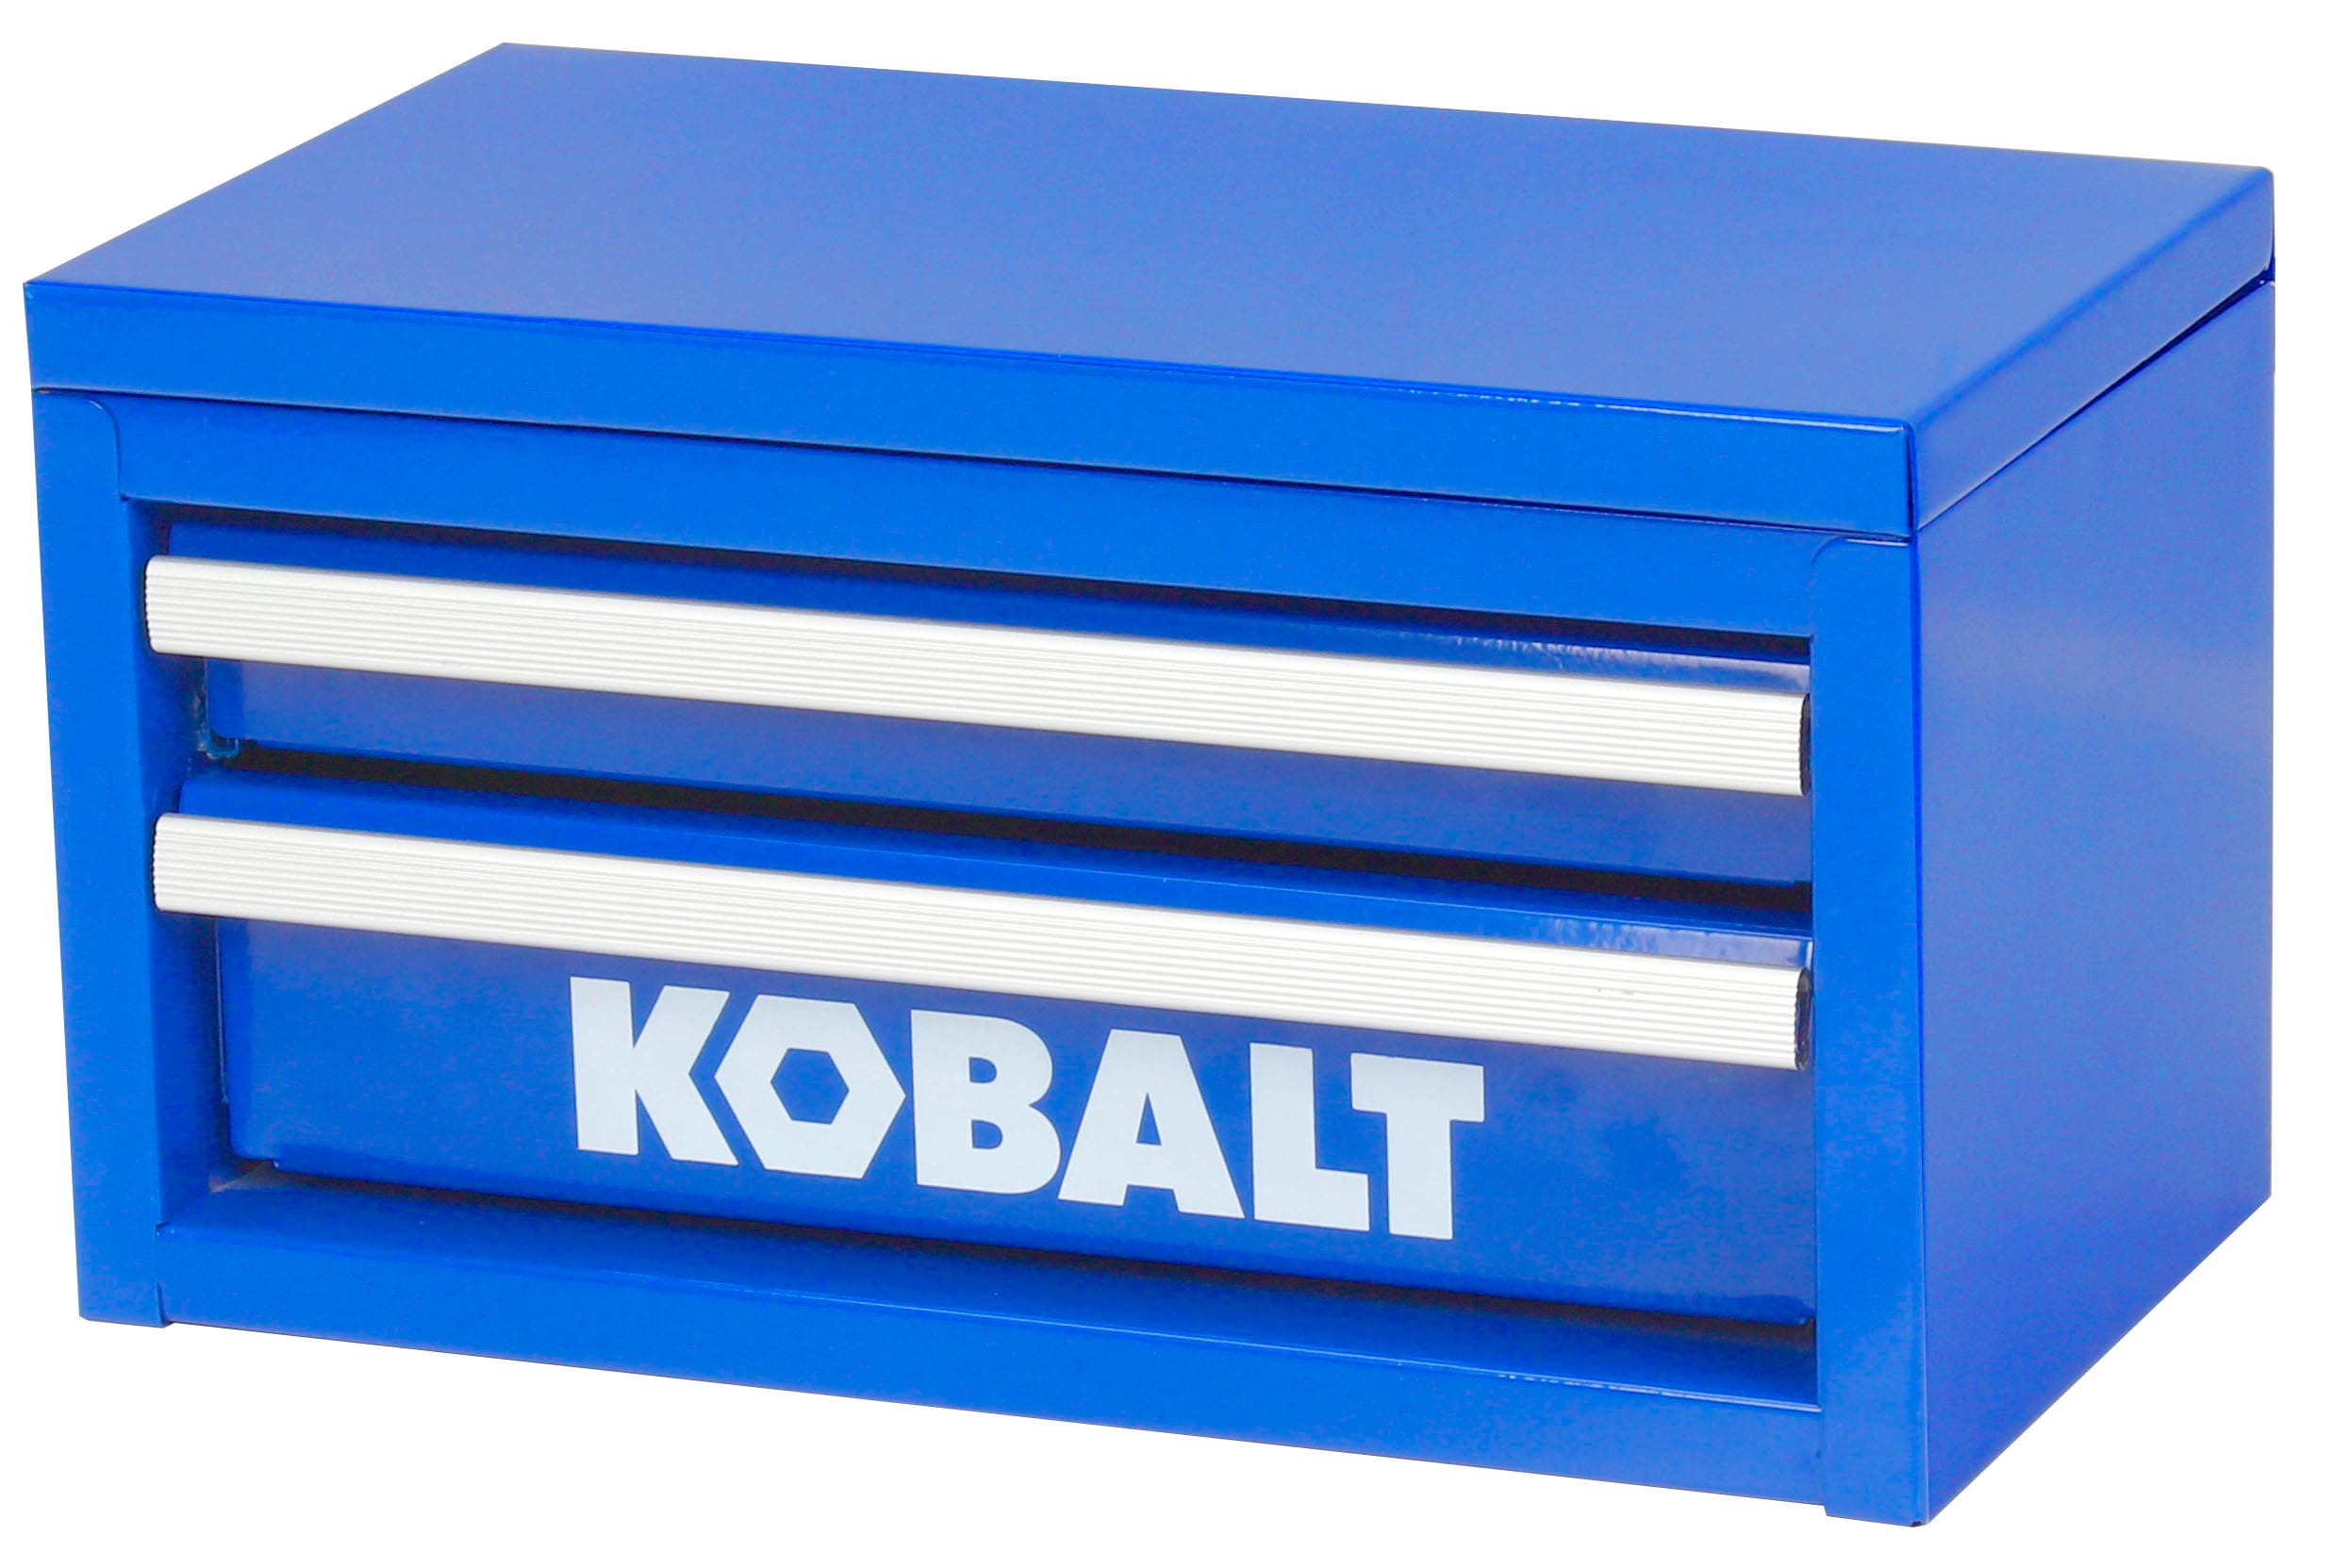 Kobalt Mini 10.83-in 2-Drawer Blue Steel Tool Box in the Portable